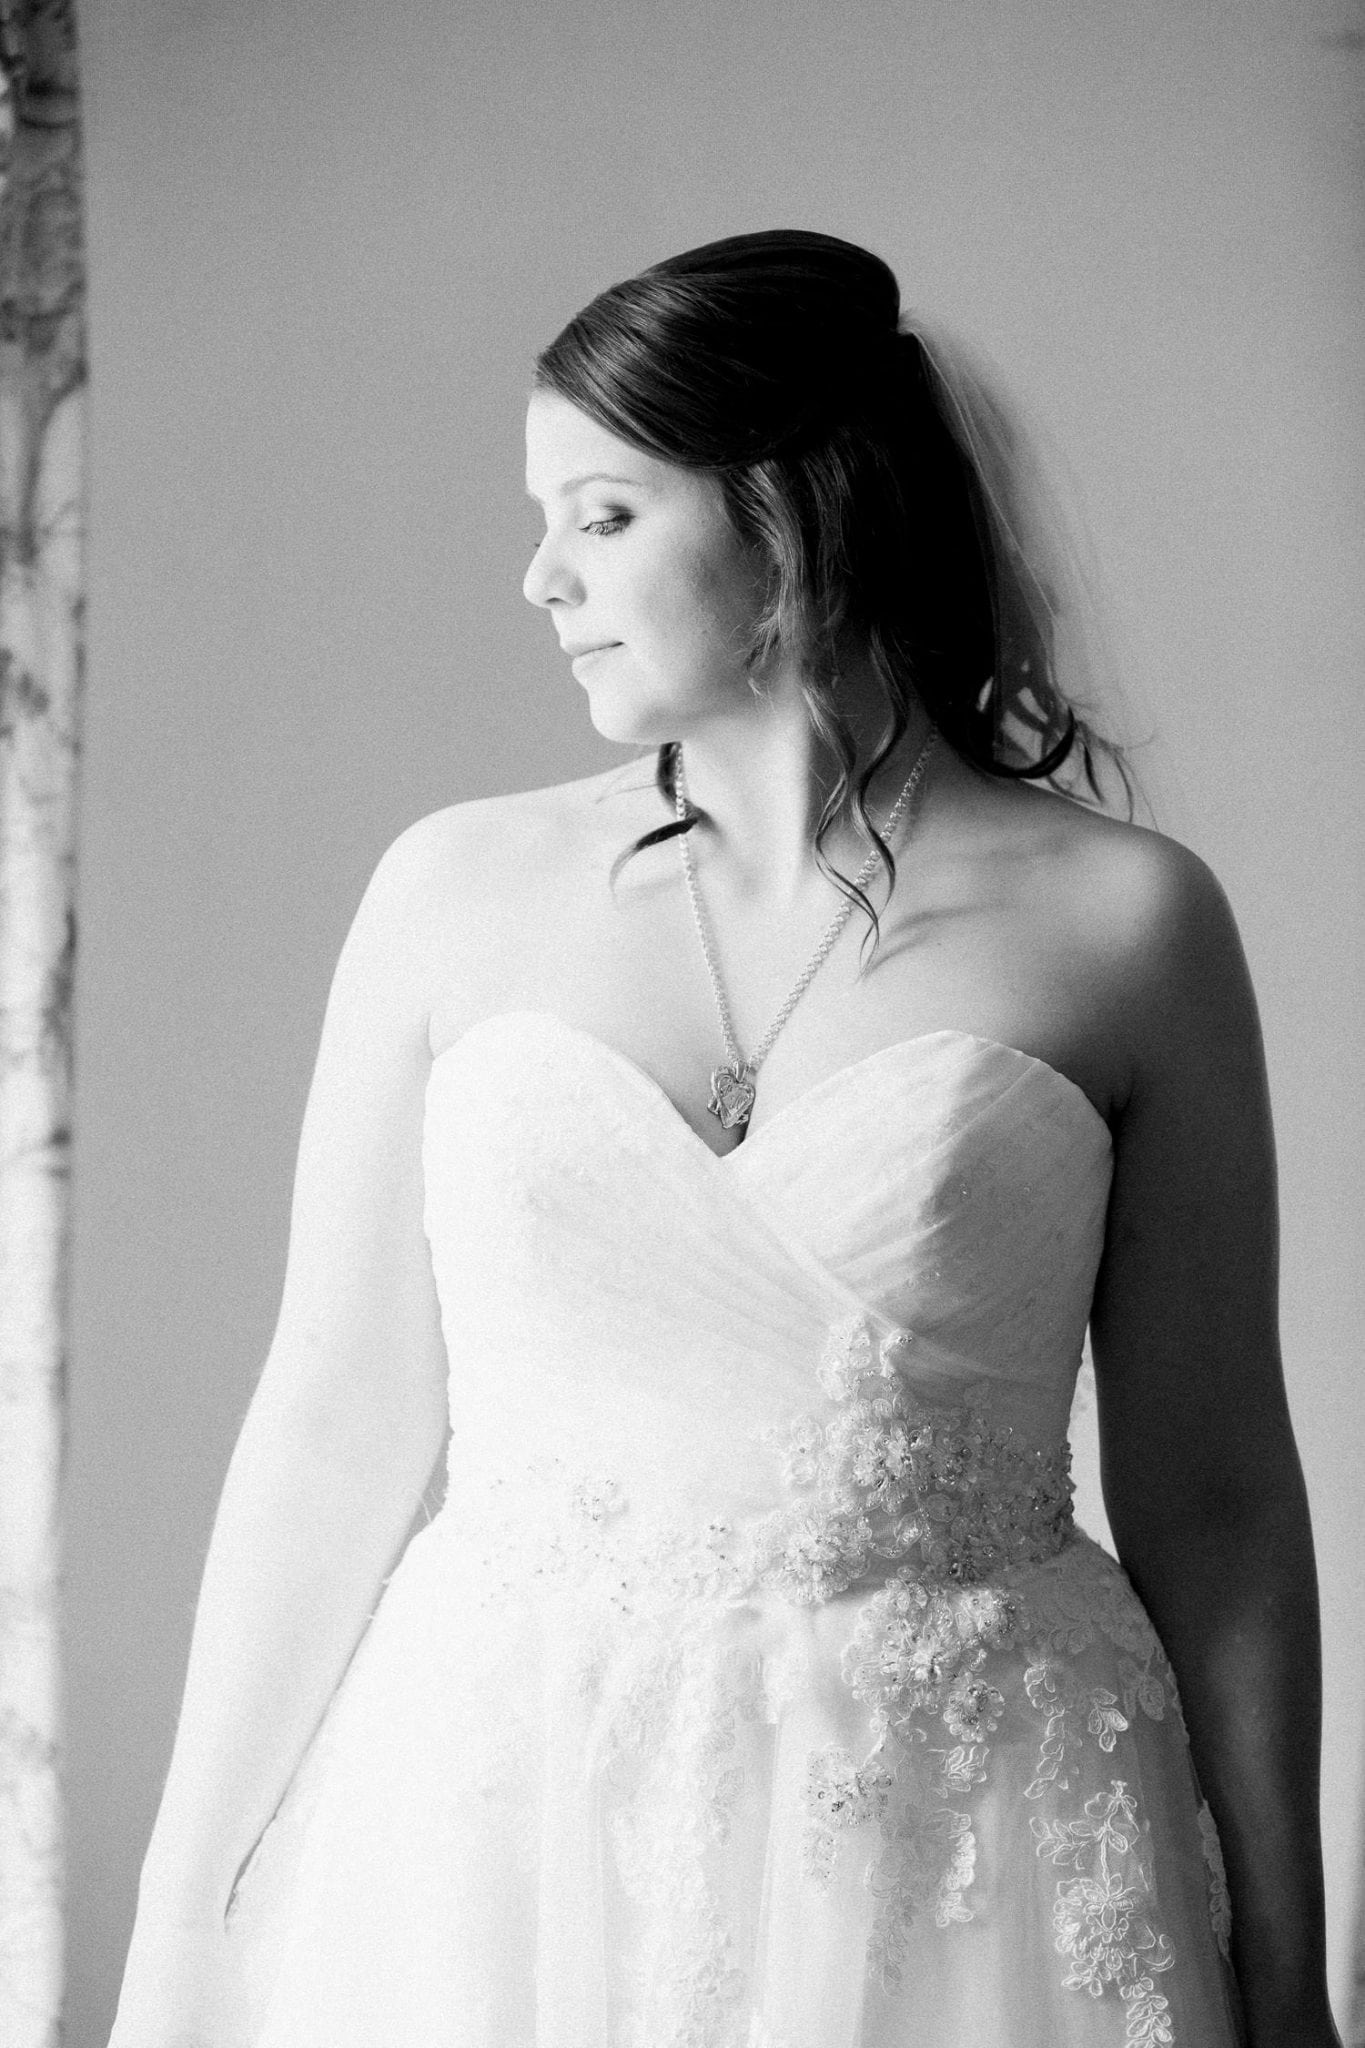 Bride portrait in b/w | Vancouver wedding photographer